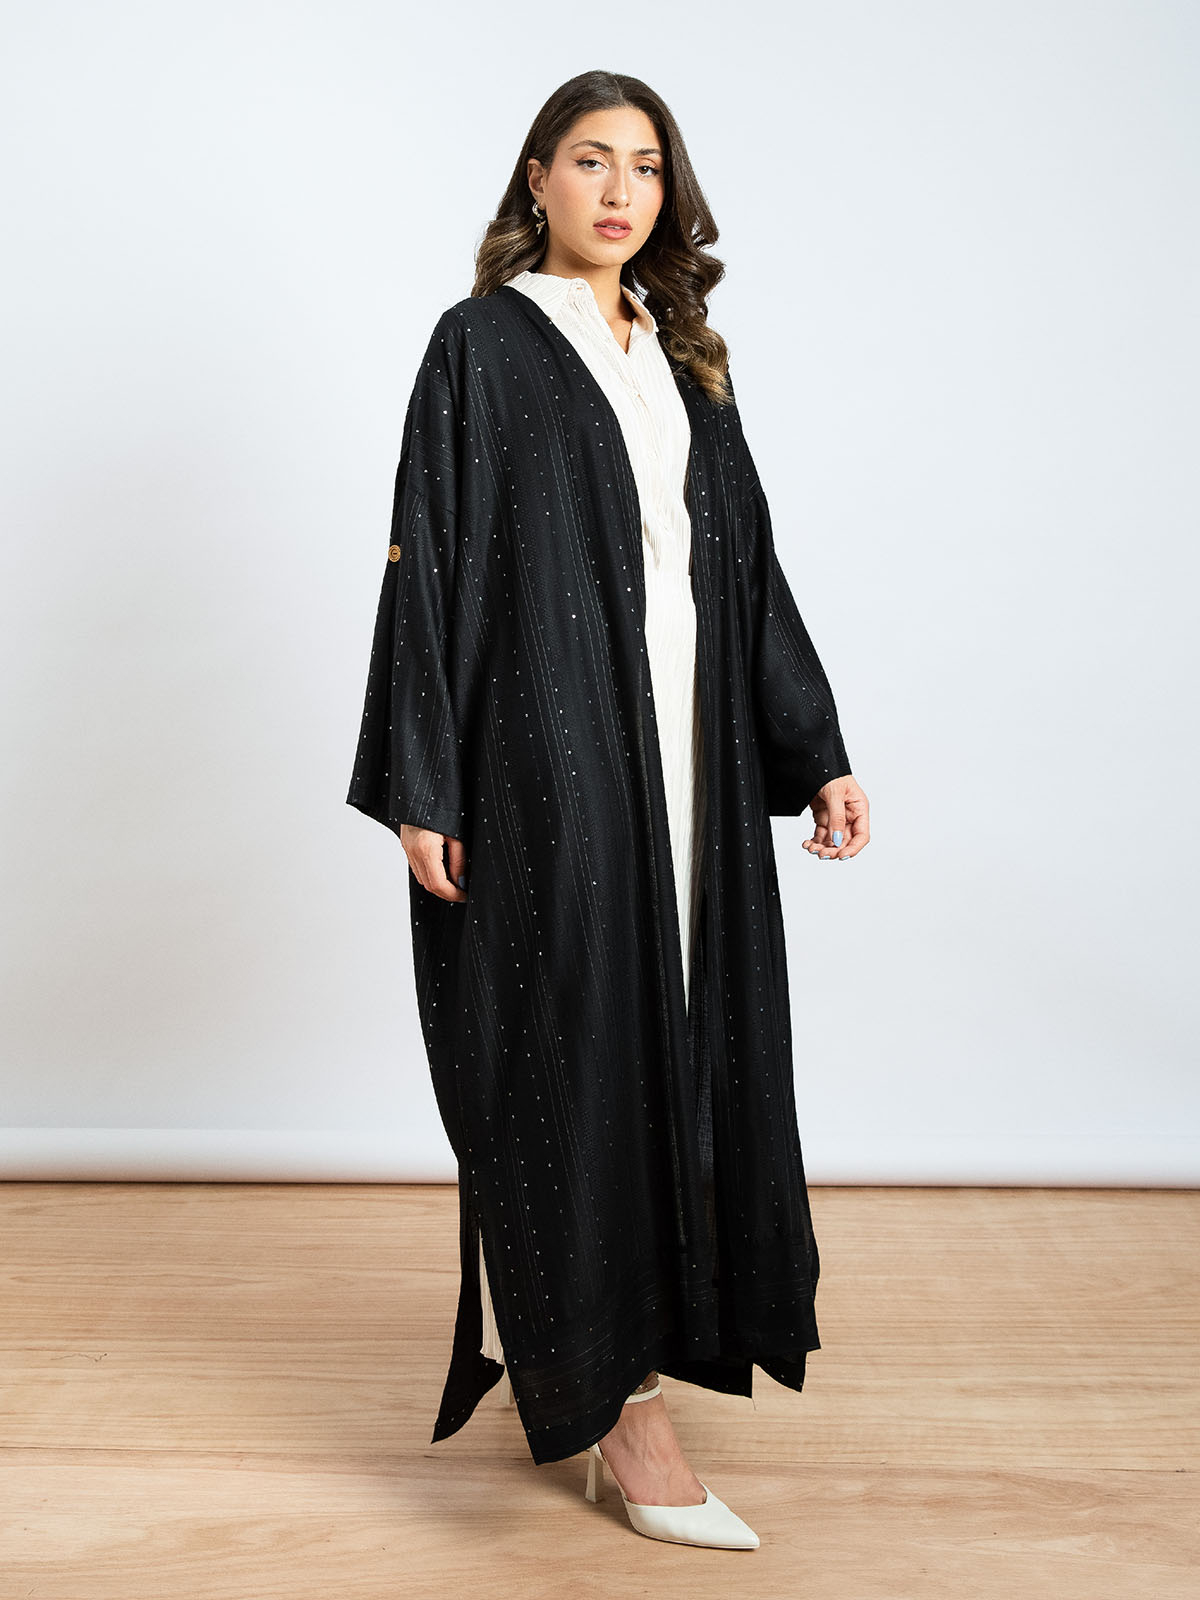 Kaafmeem women clothing wide cut black color long fancy sequin abaya in lightweight fabric for Ramadan nights